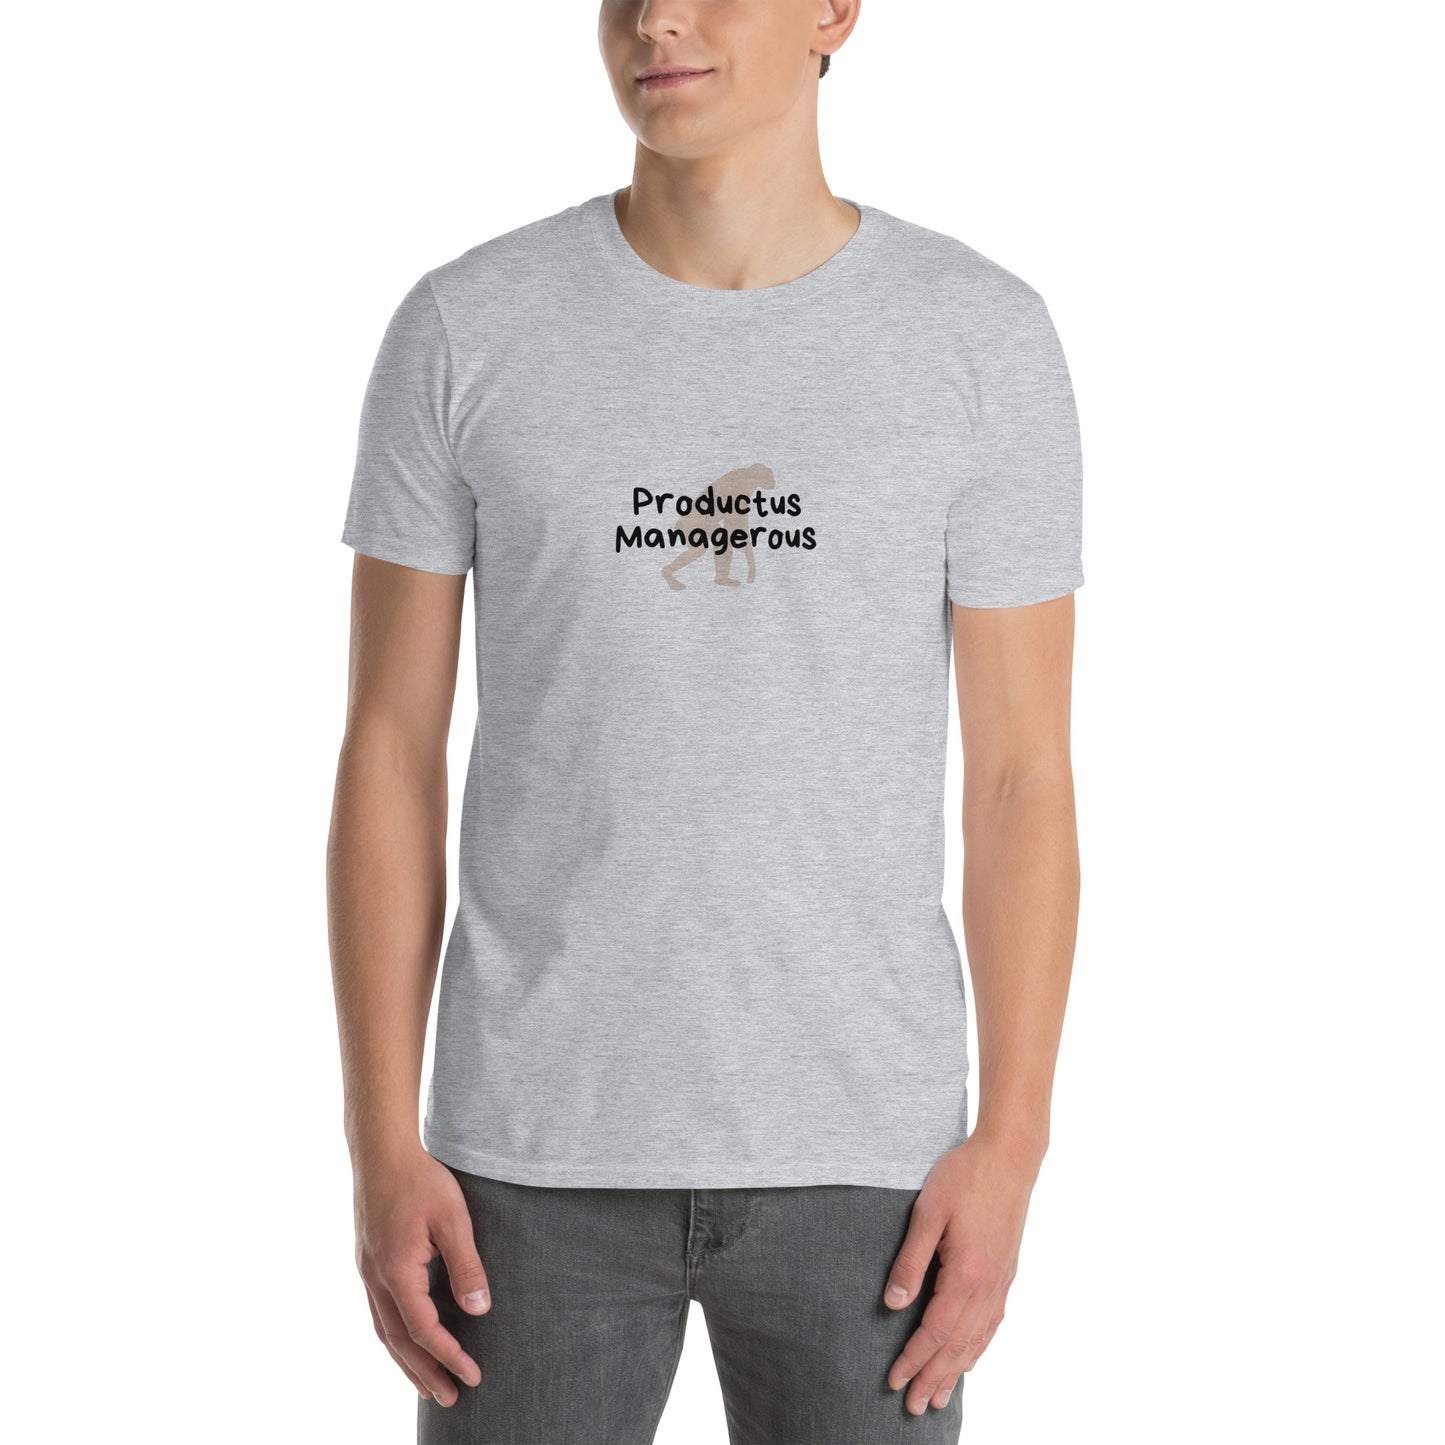 Productus Managerous Unisex T-Shirt